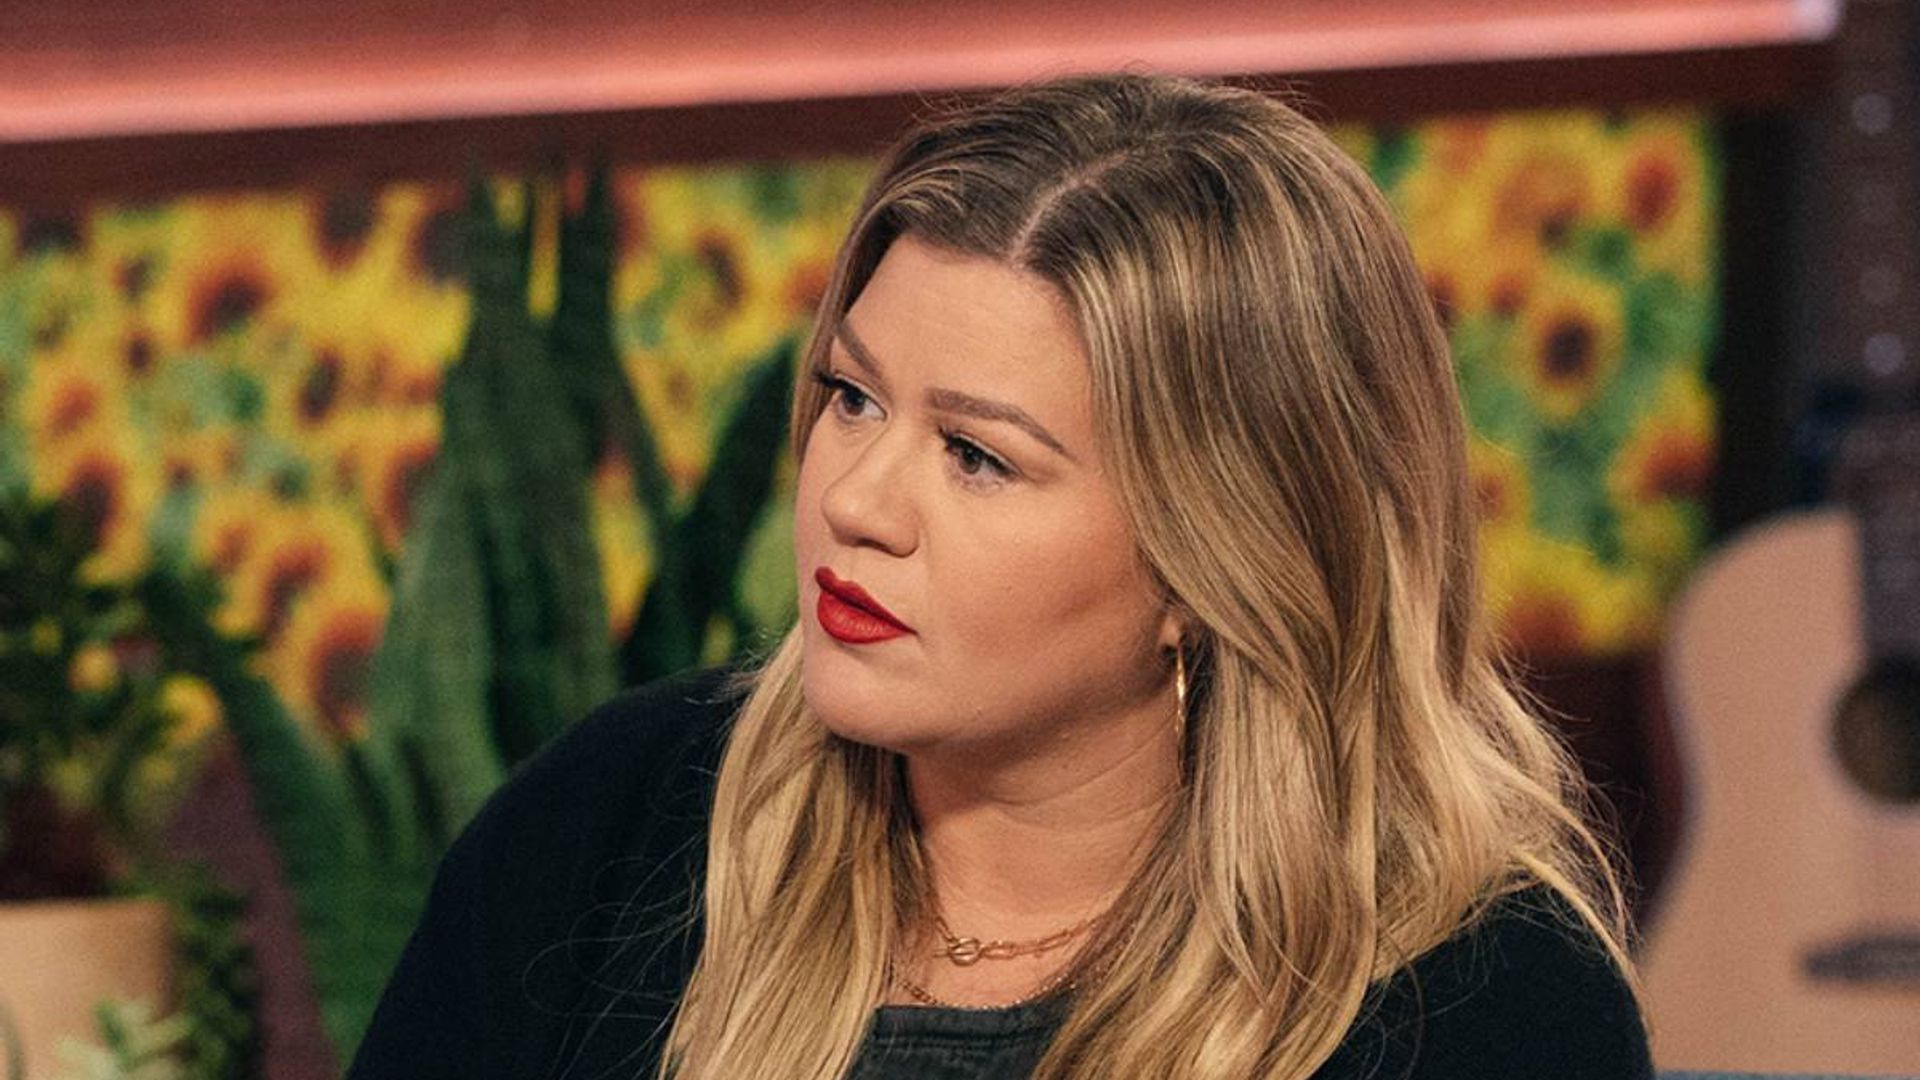 Kelly Clarkson left terrified on show over Sarah Hyland's 'insane' roommate experience